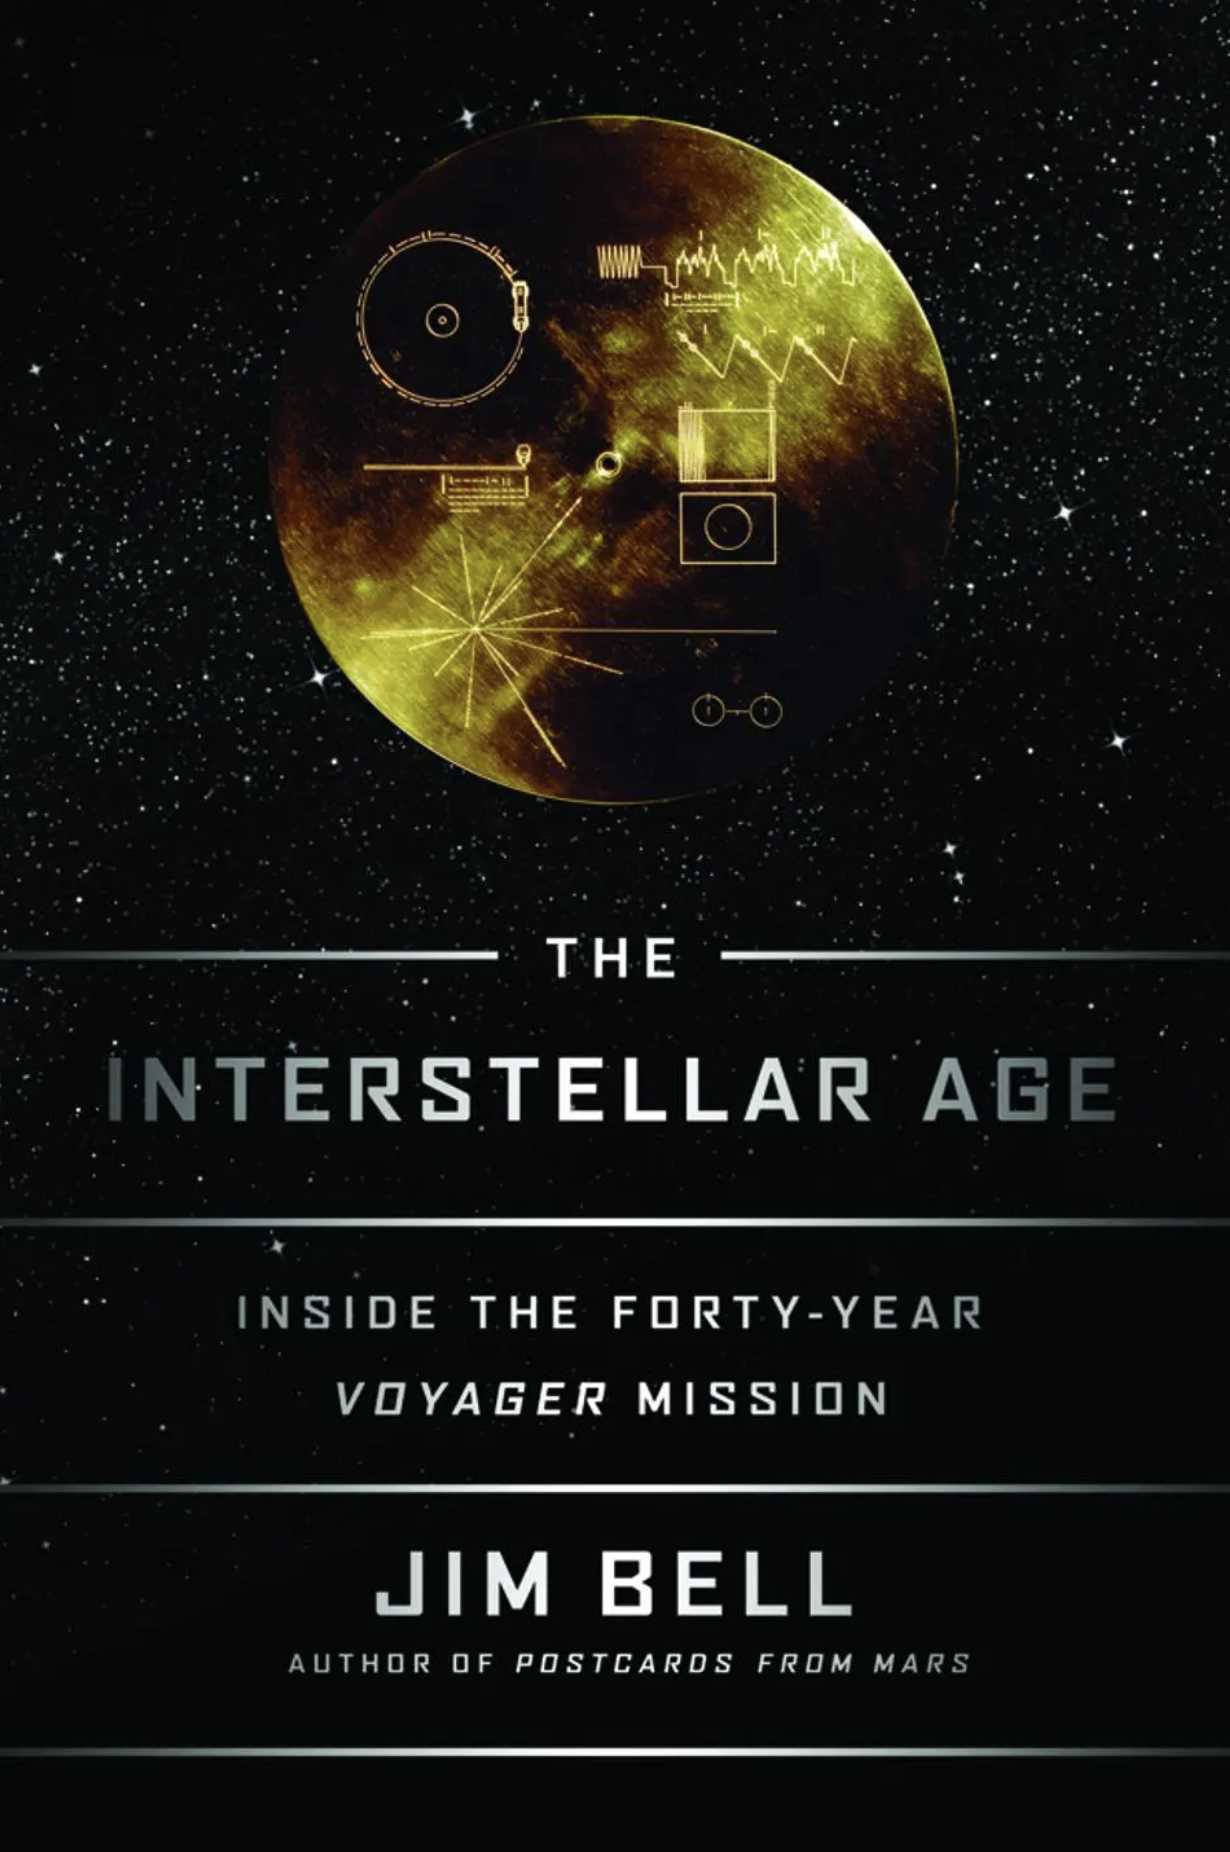 Summer Space Reading List: The Interstellar Age